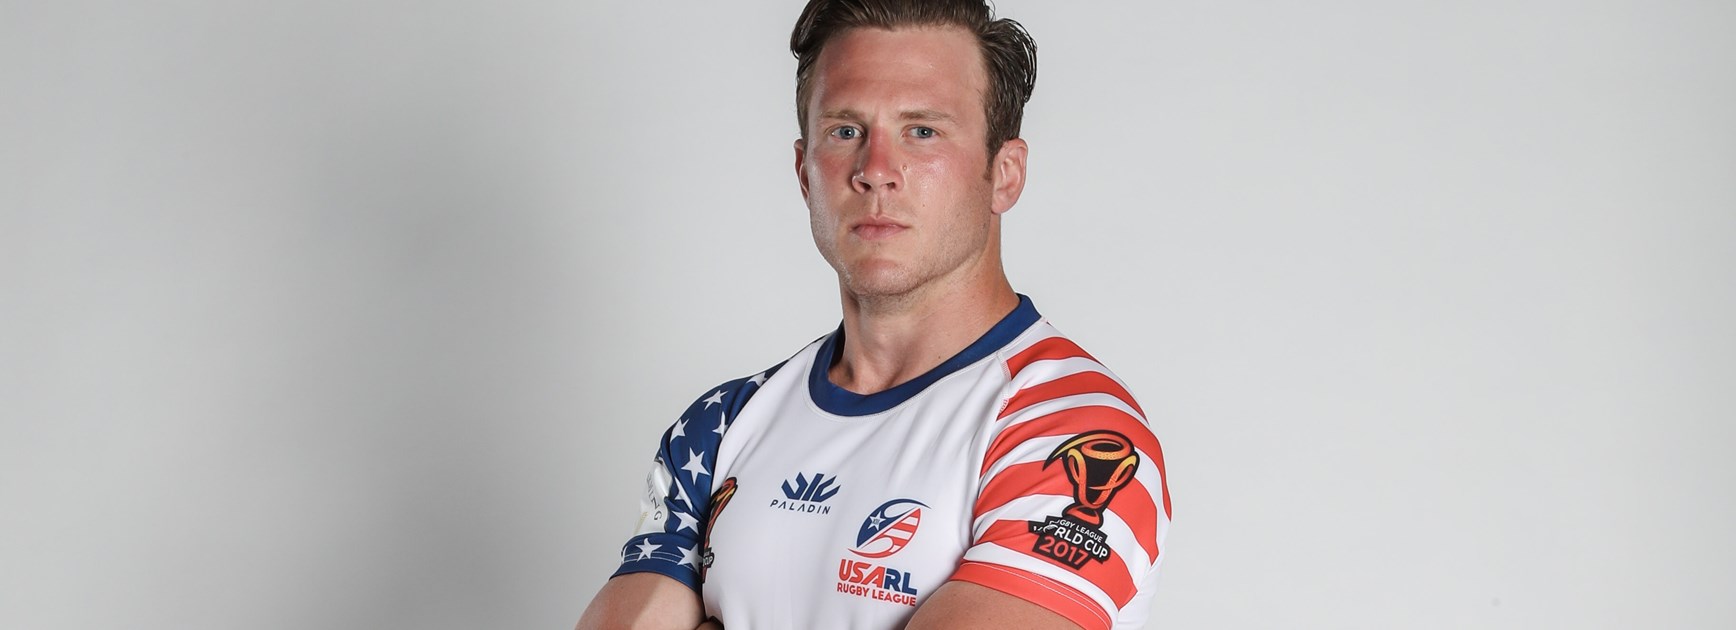 USA captain Joe Eichner